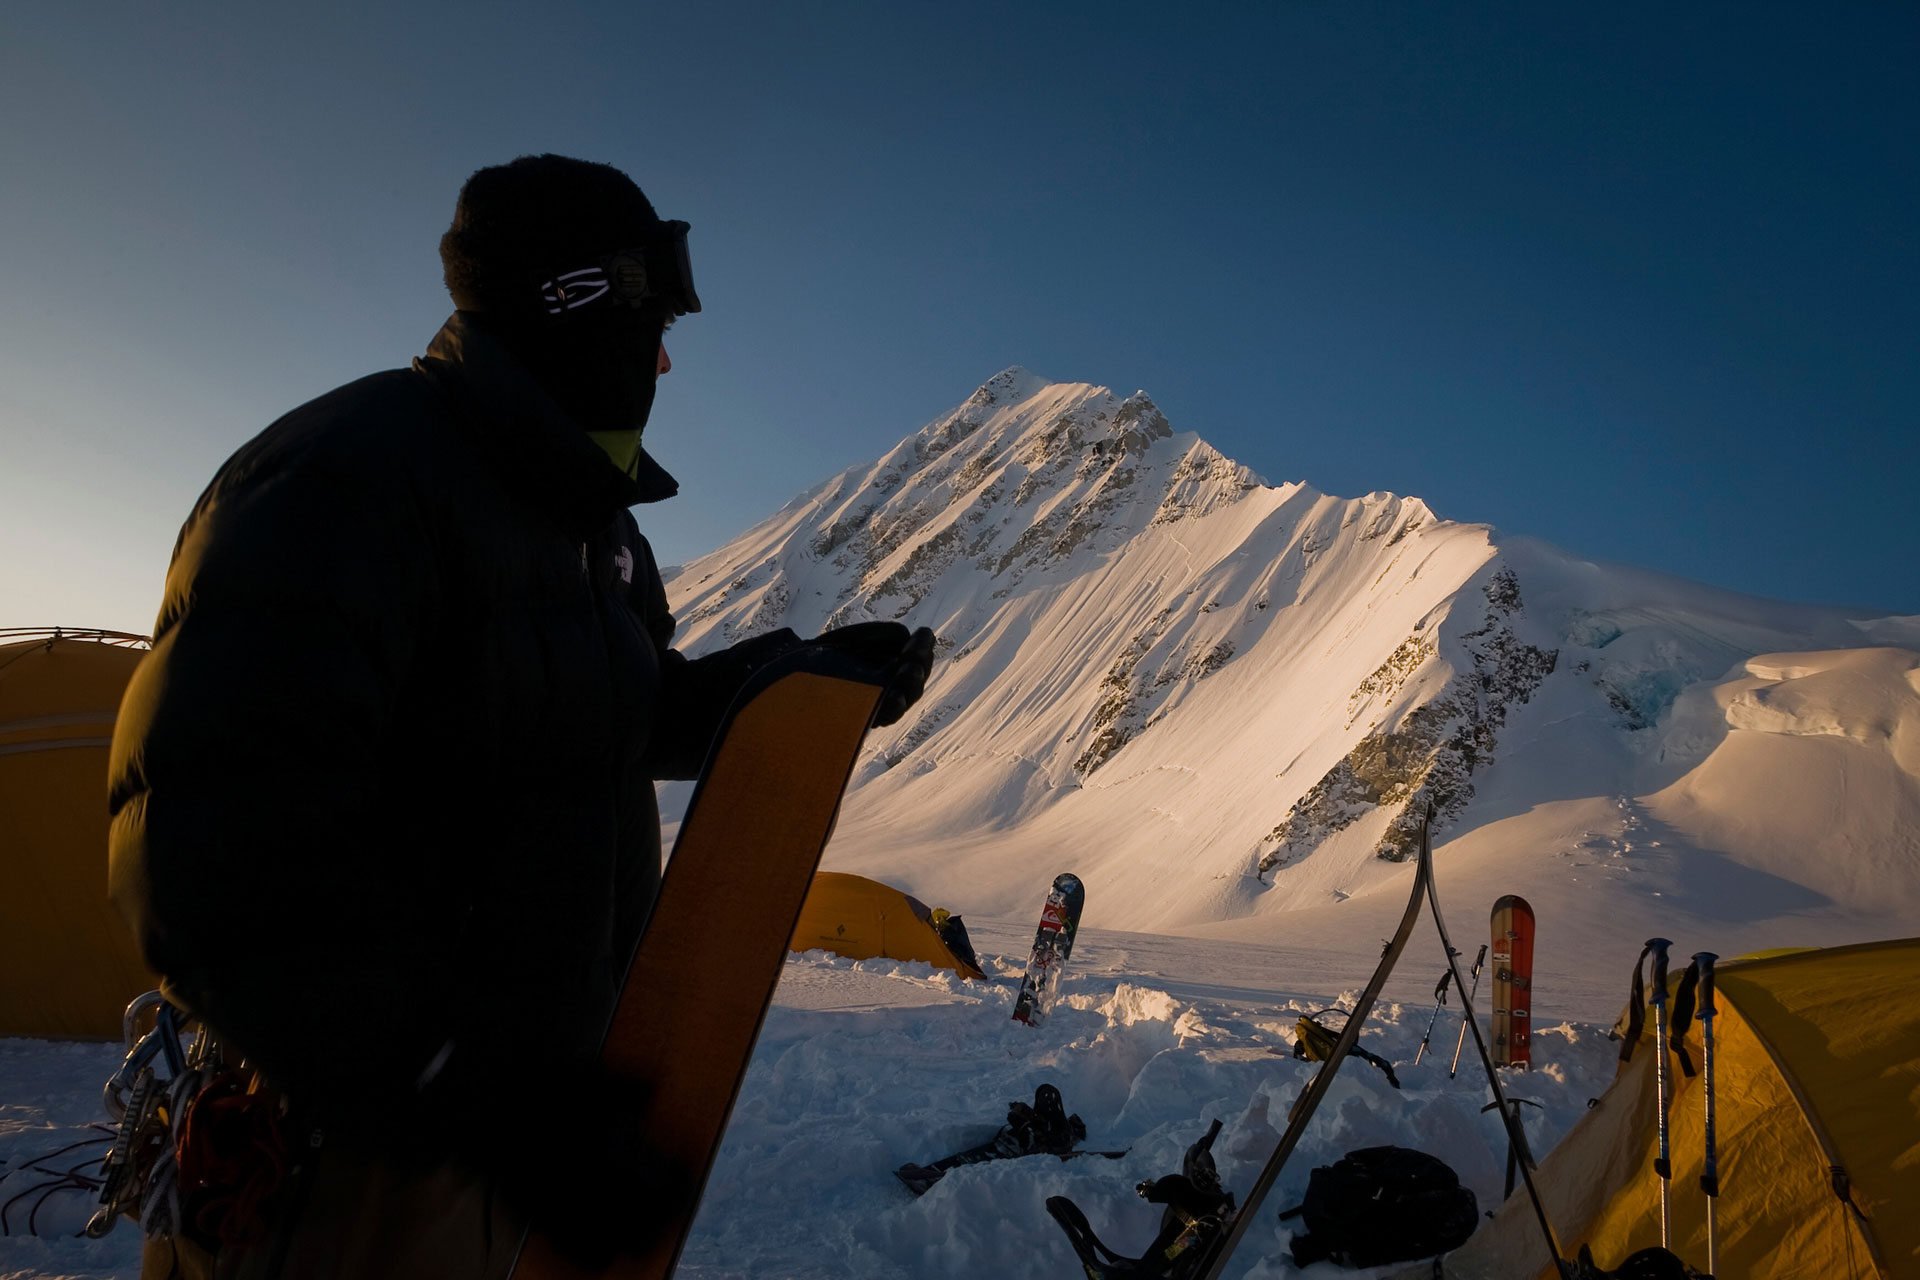 dan-milner-mountain-bike-adventure-and-snowboard-photographer-interview-3